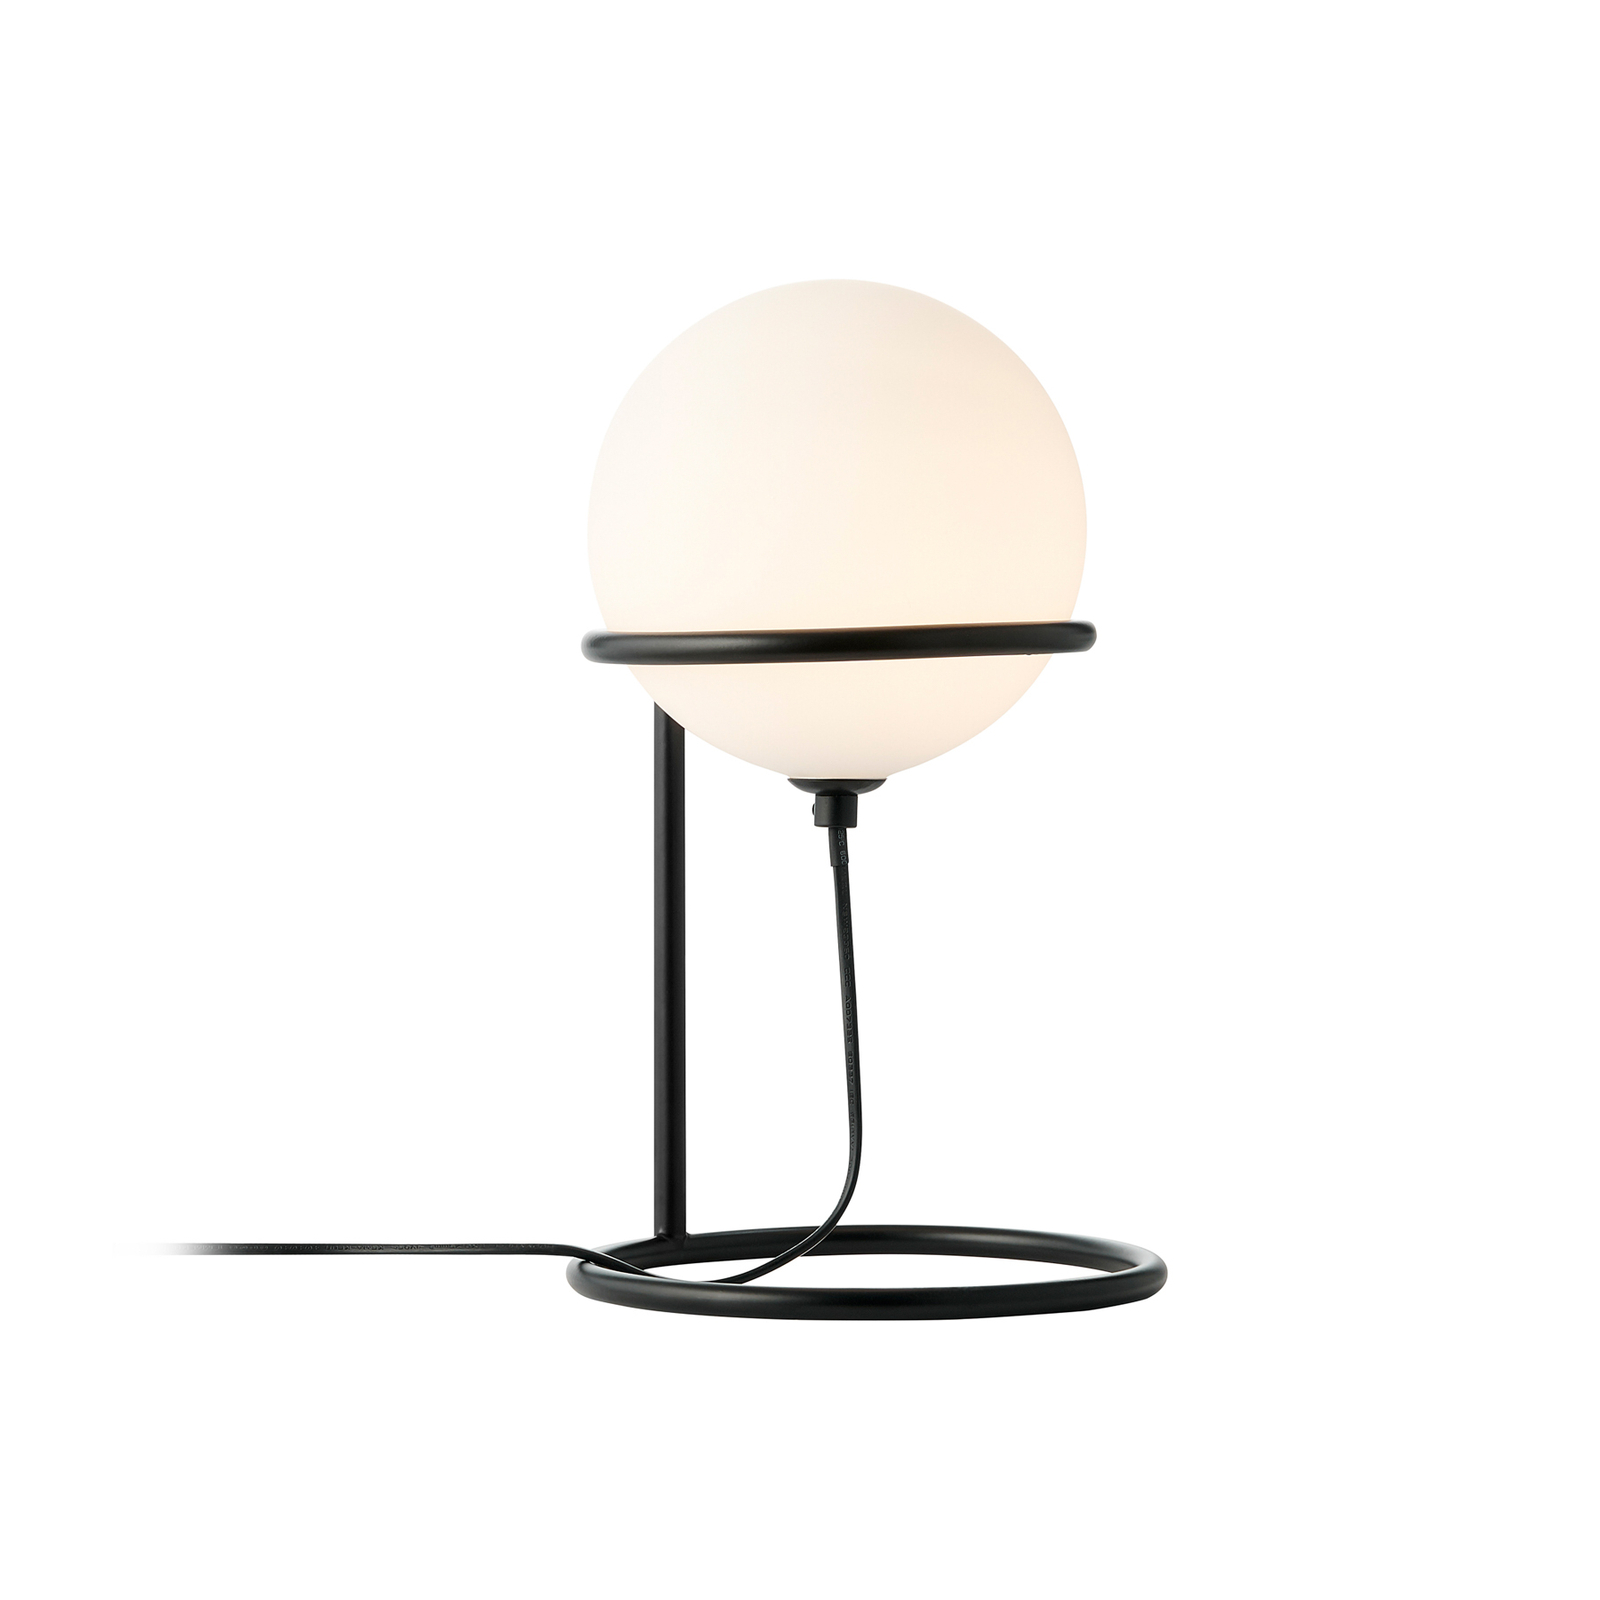 Wilson bordslampa, metall, svart, glasskärm